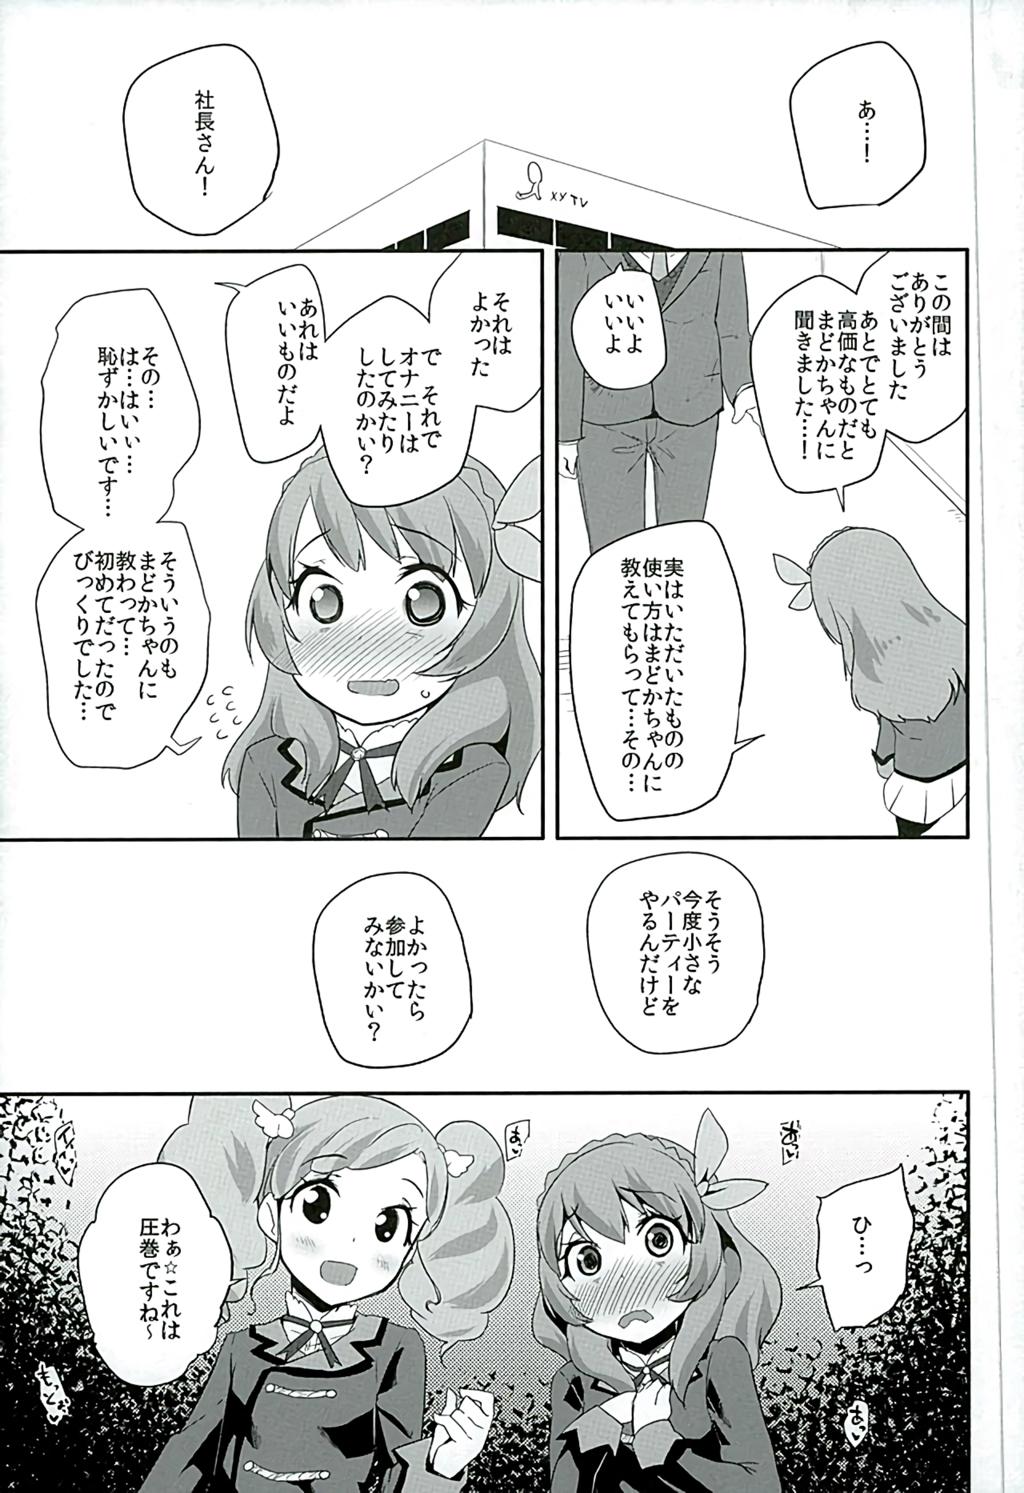 Young Tri Tri Trips! - Aikatsu Hermosa - Page 8